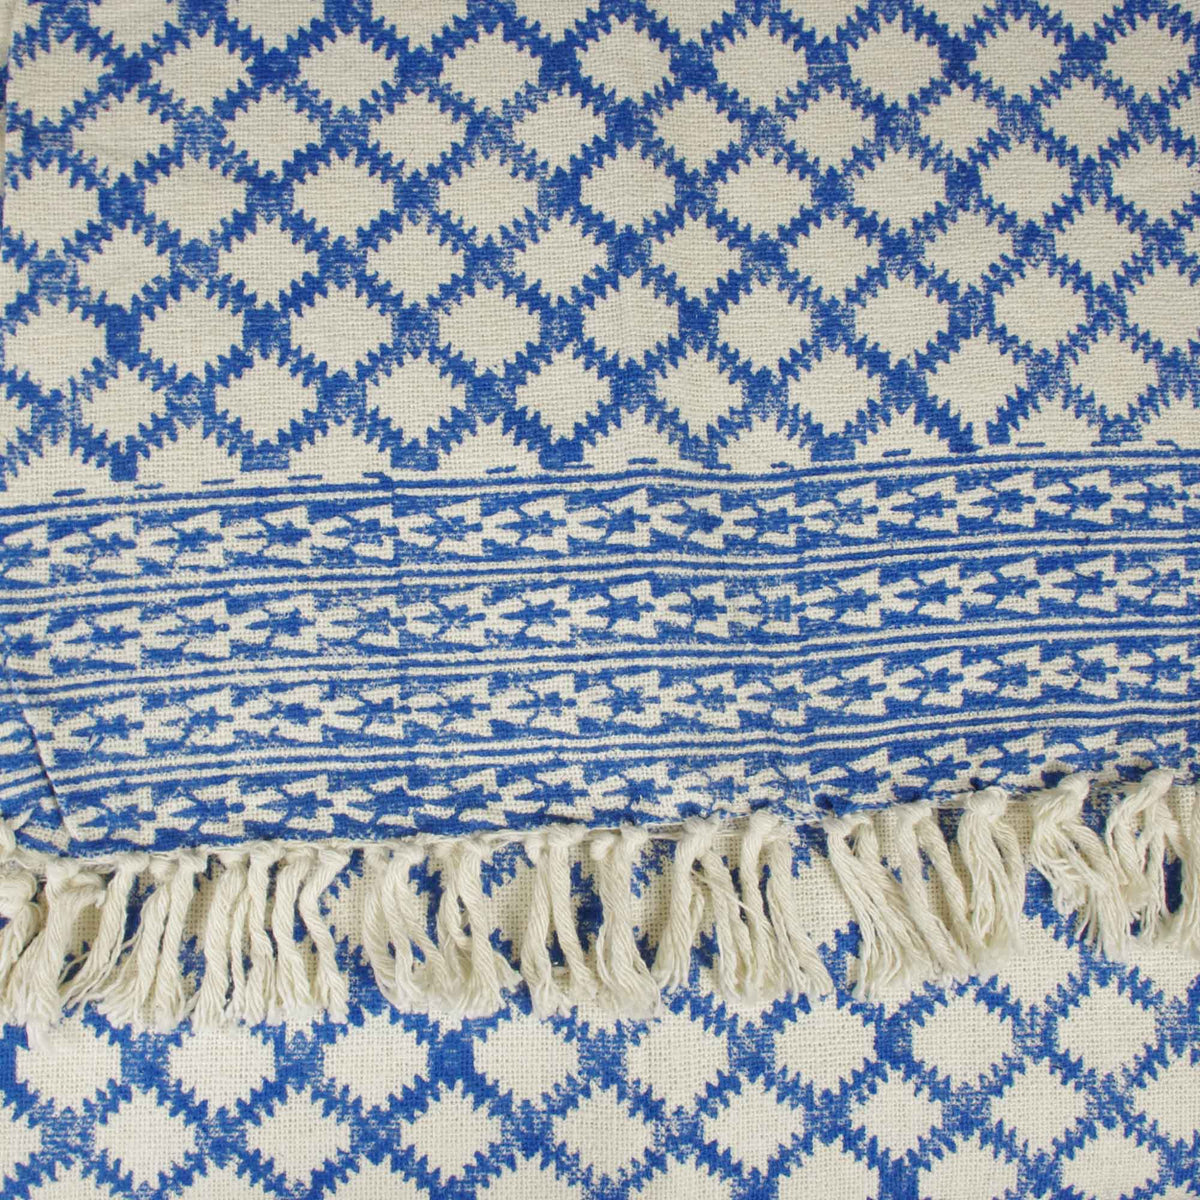 Block Printed Handloom Cotton Sofa Throw With Tassels - Blue White Geometric